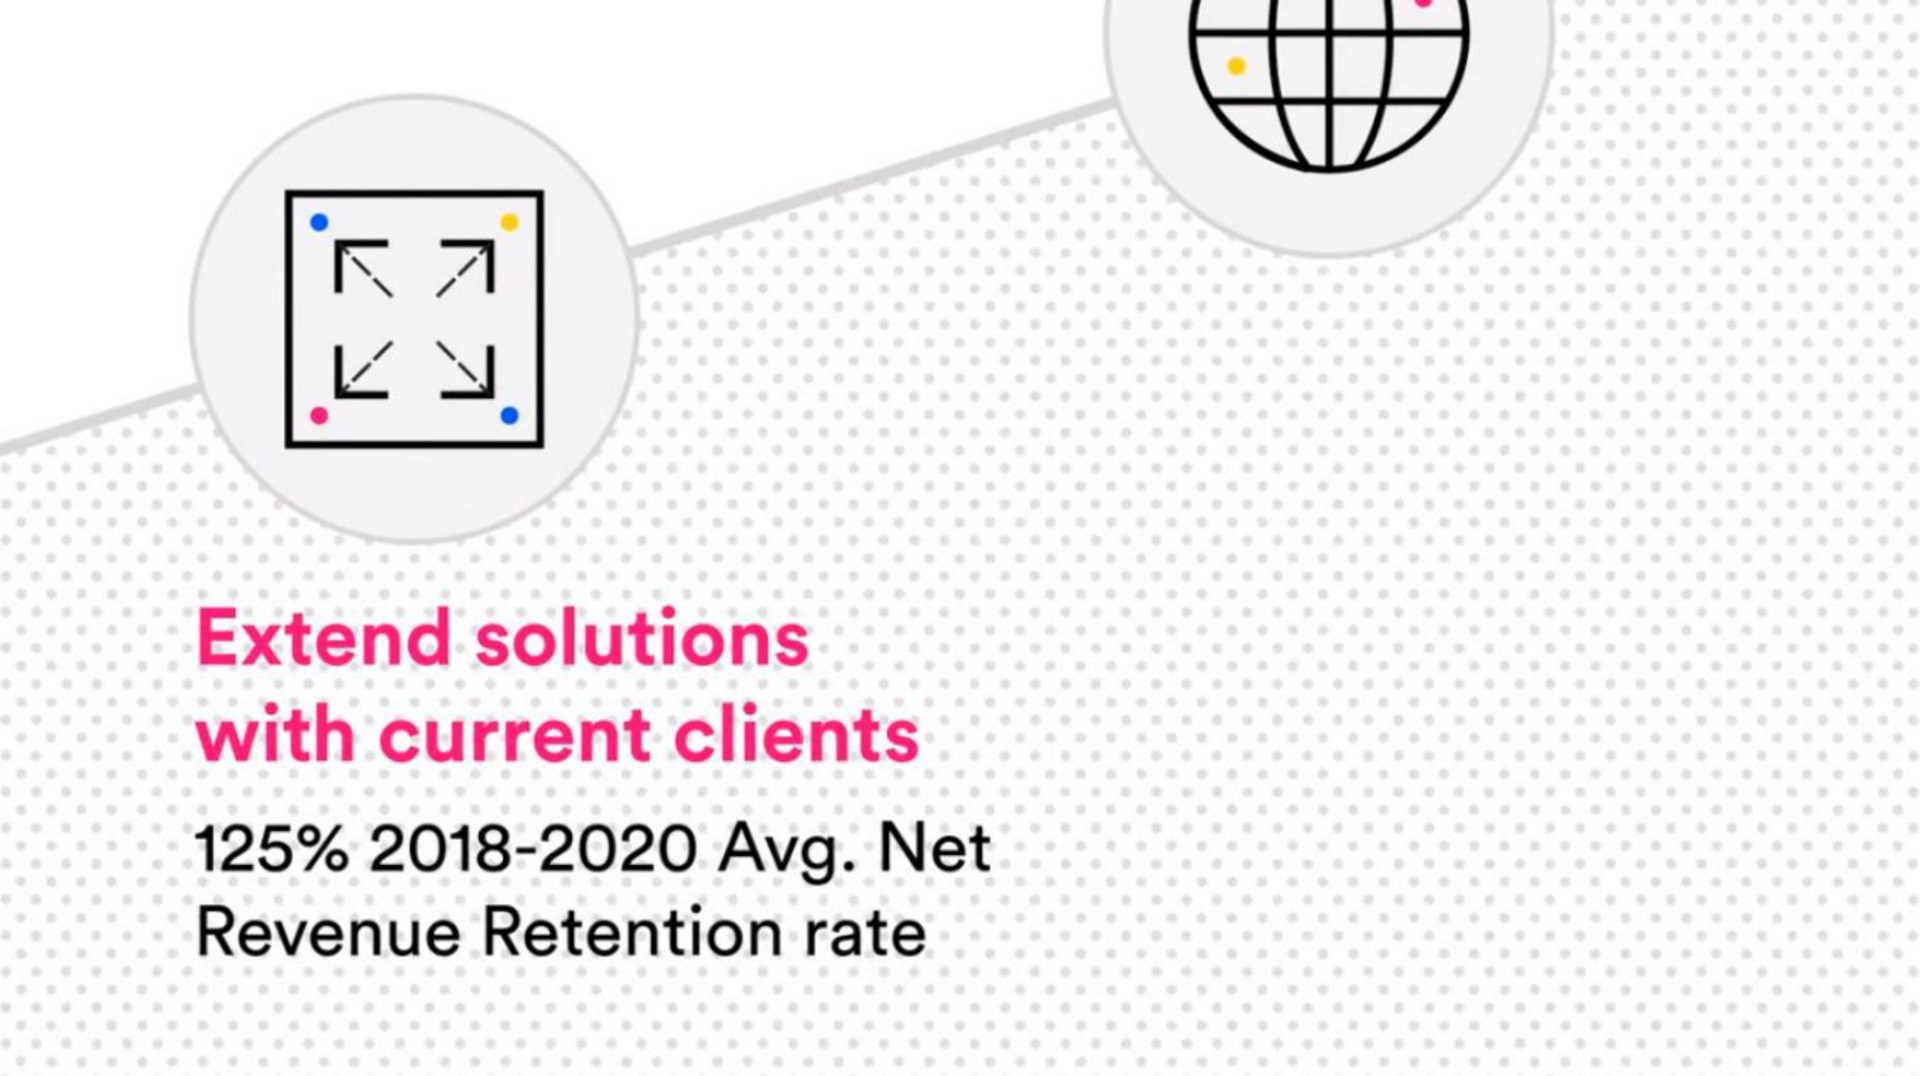 extend solutions with current clients net revenue retention rate | TaskUs